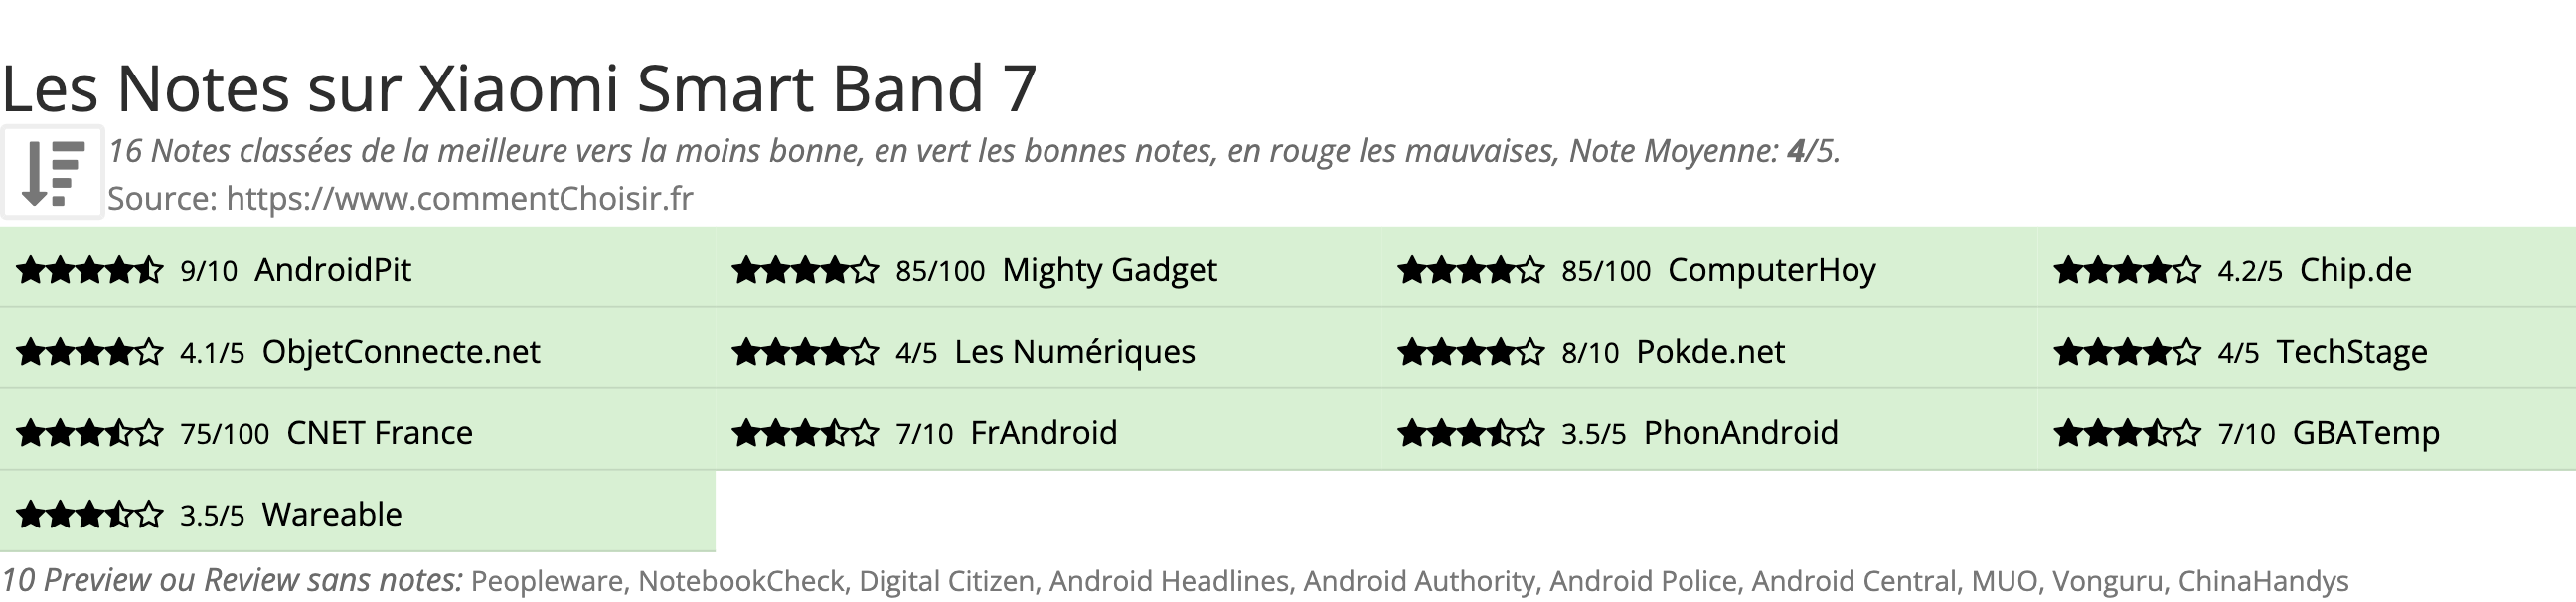 Ratings Xiaomi Smart Band 7